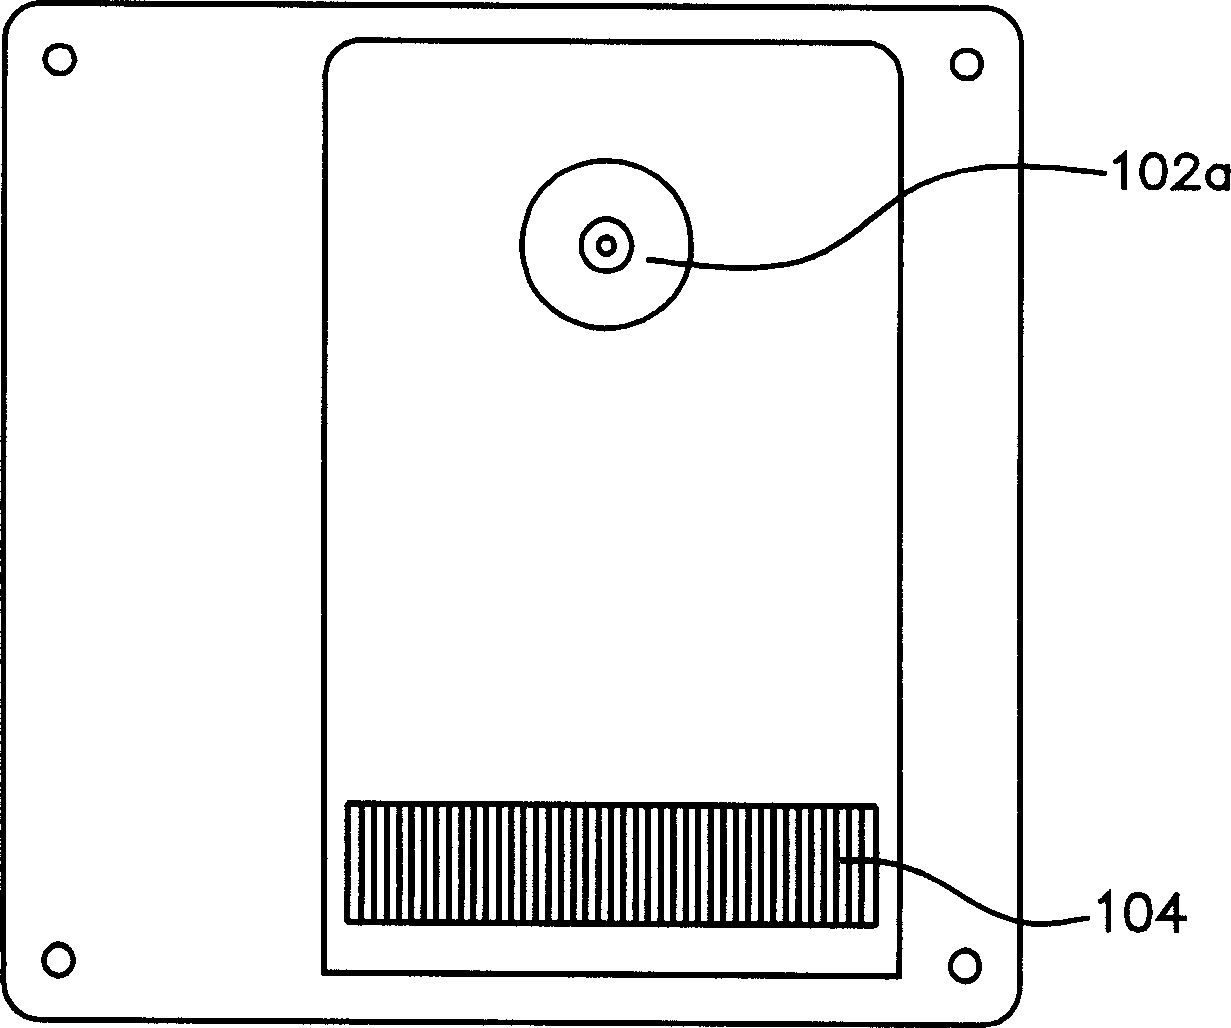 Heat radiator with heat exchange function